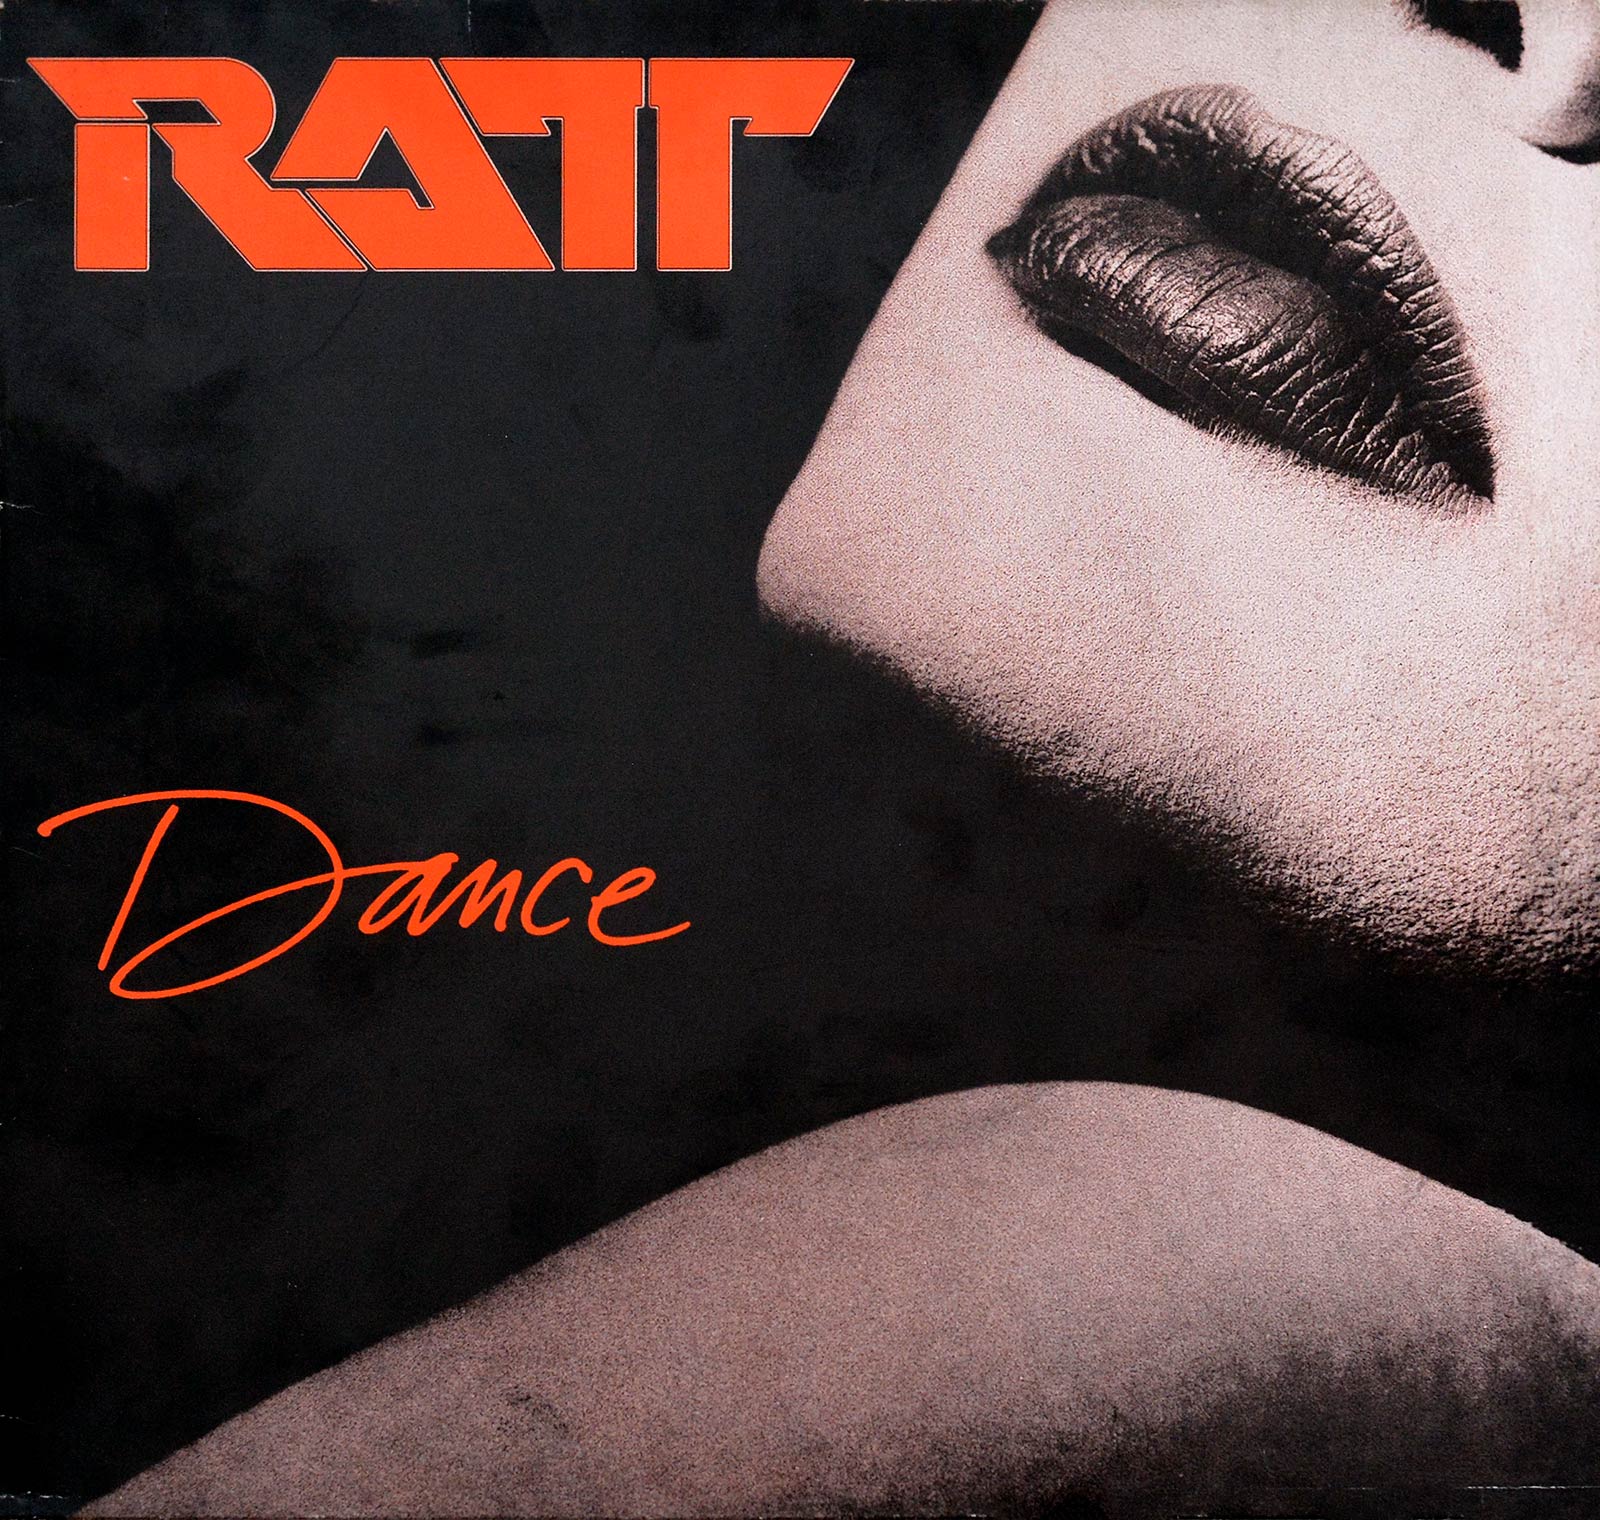 ratt dance front cover photo edited